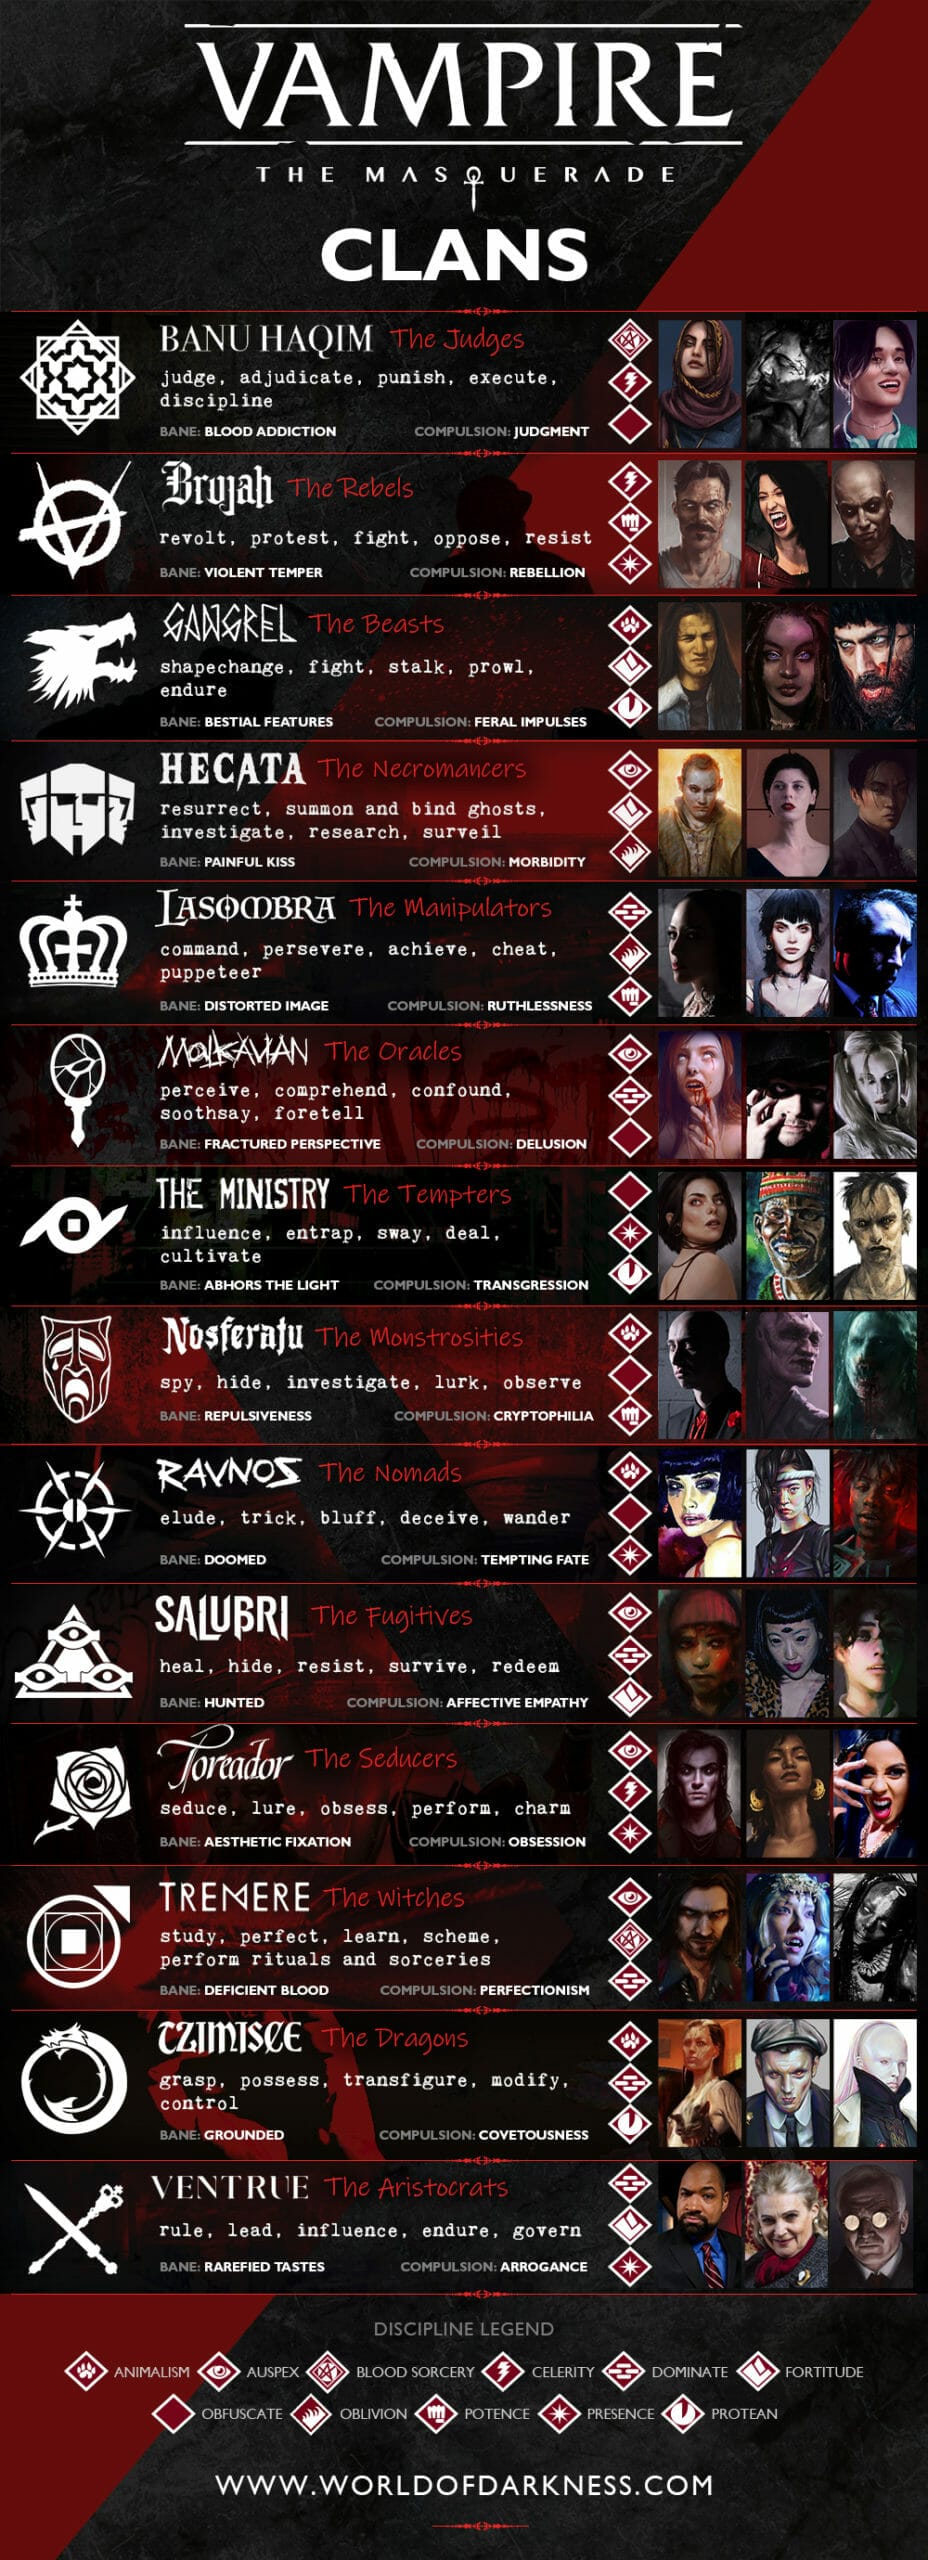 Vampire 5e clans